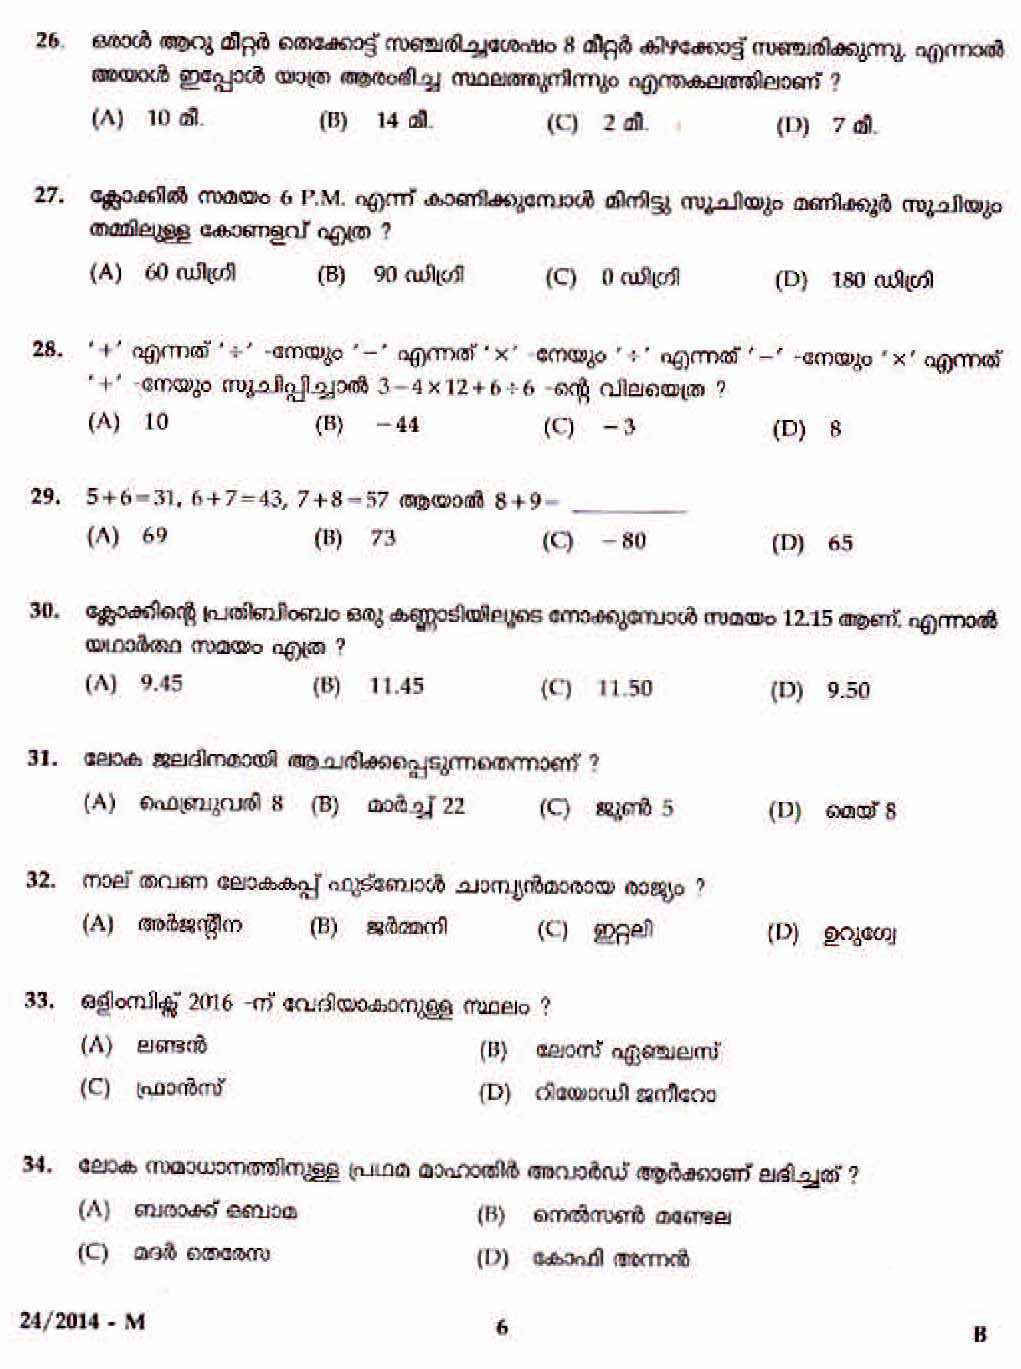 LD Clerk Malappuram Question Paper Malayalam 2014 Paper Code 242014 M 2